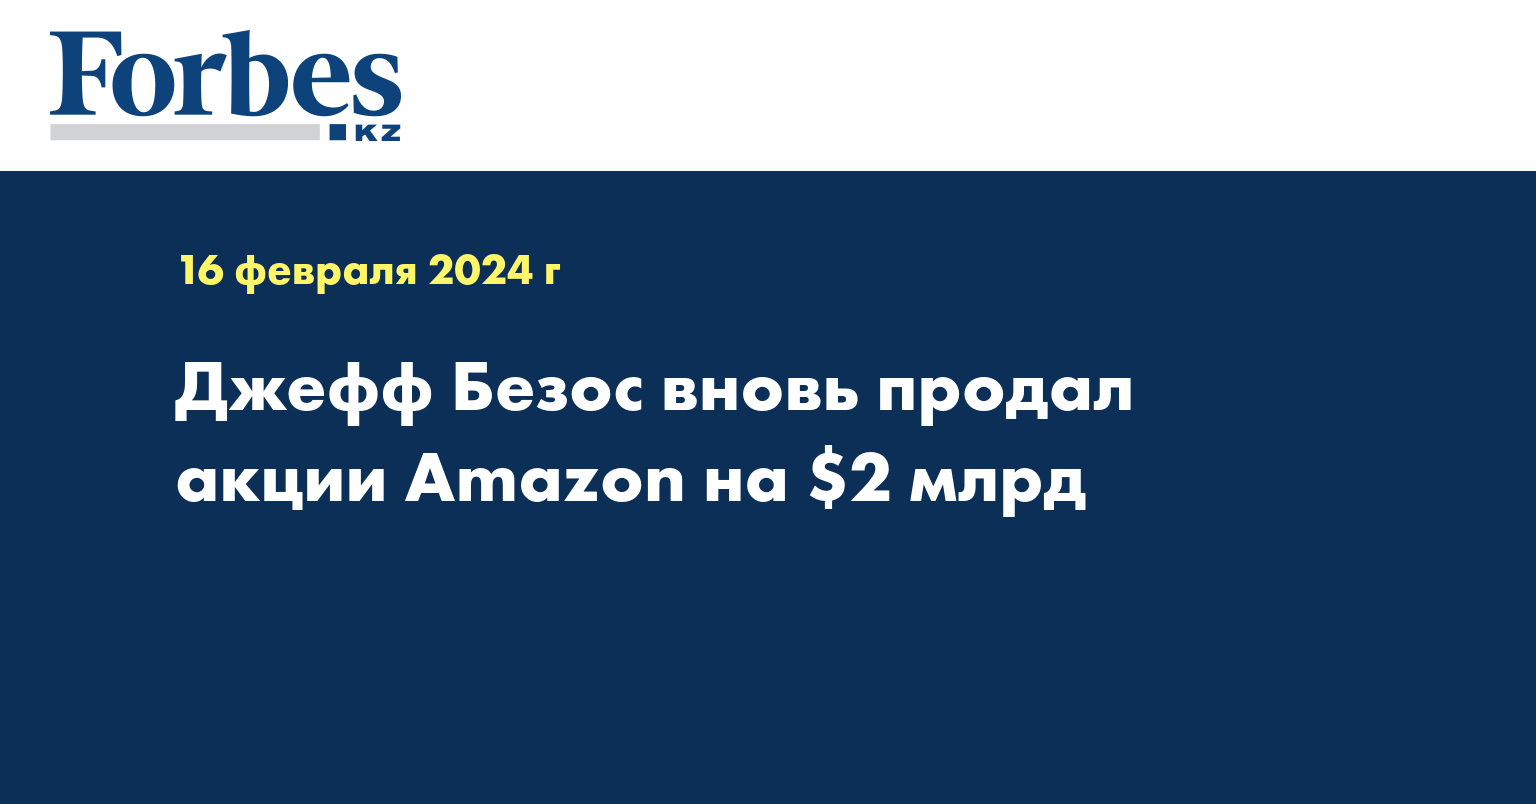 Джефф Безос вновь продал акции Amazon на $2 млрд